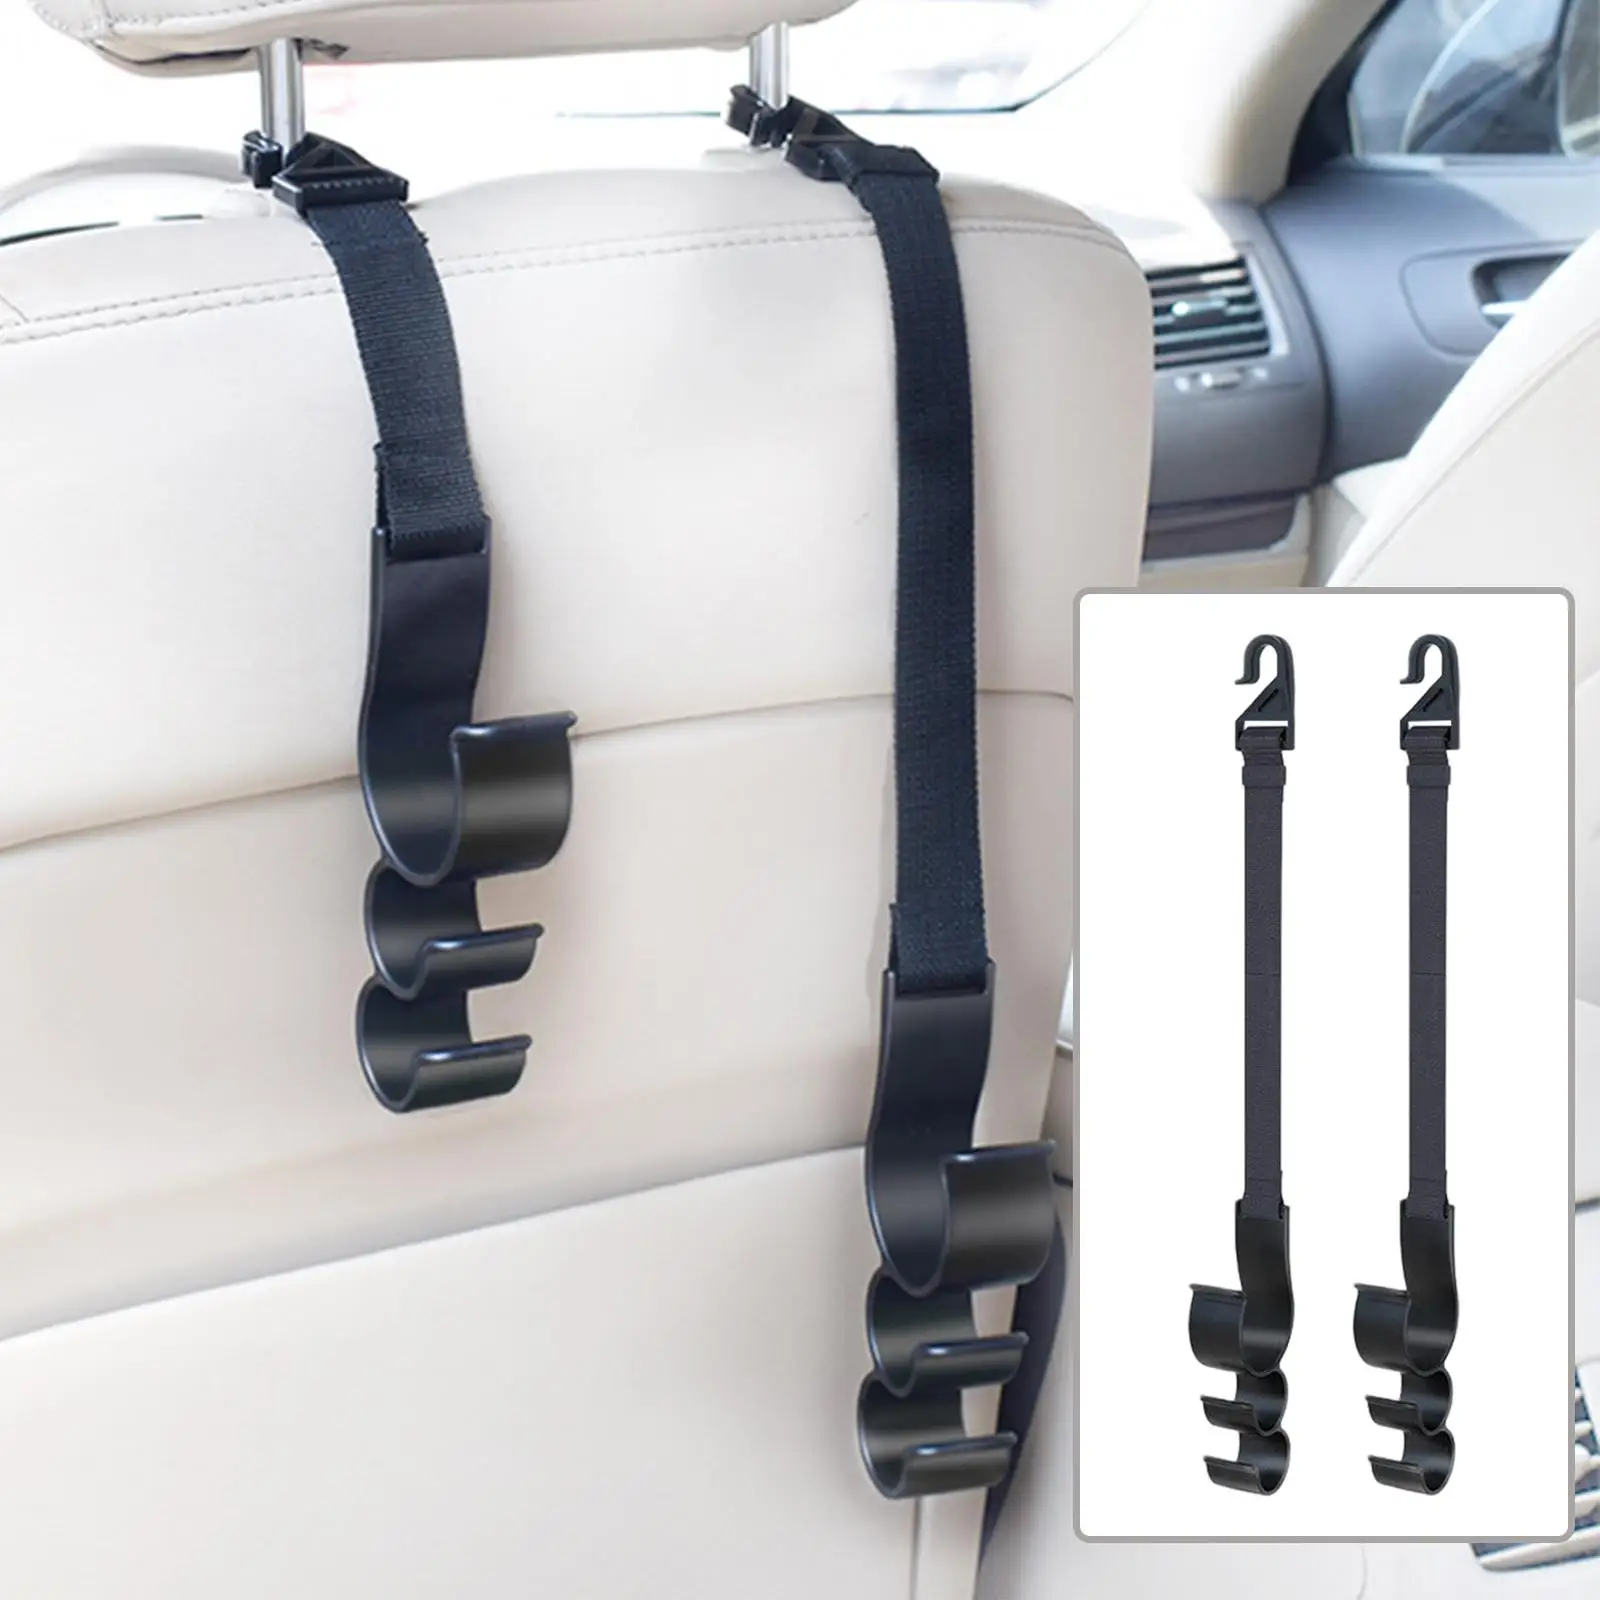 Car hook for headrests, Backseat Storage Organizer Fits for Water Bottles